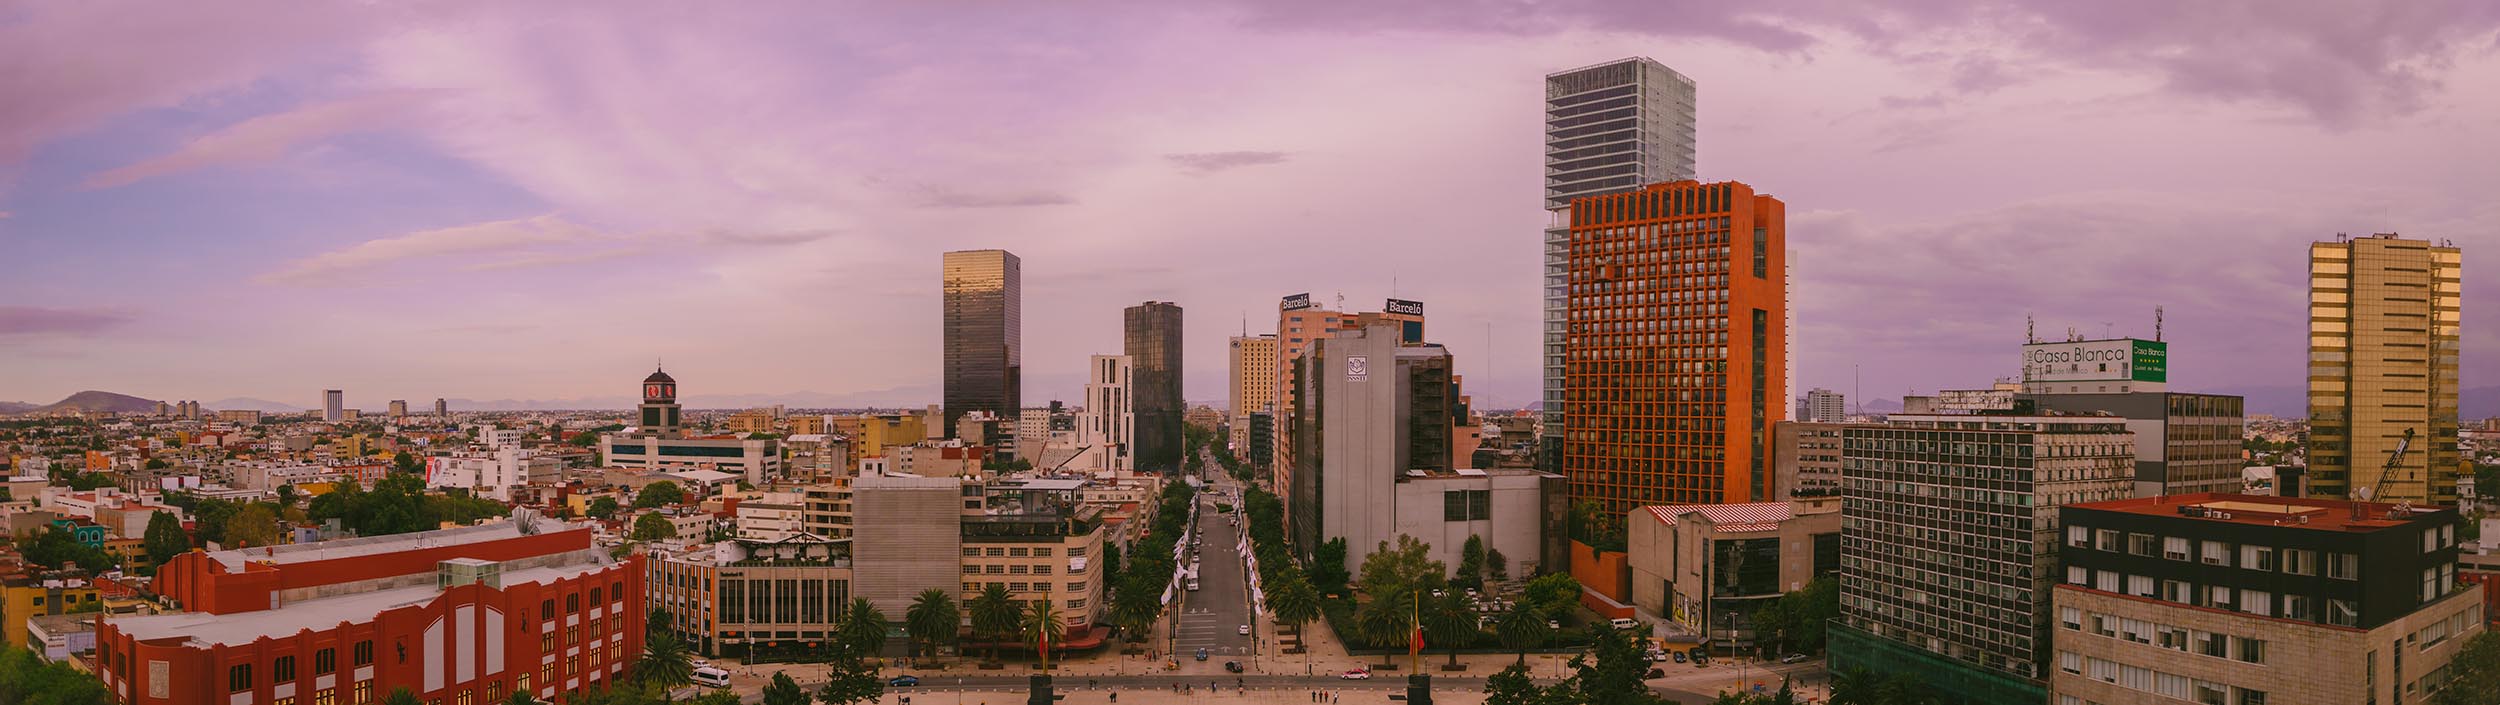 View of the city from Monumento a la Revolución, Mexico City